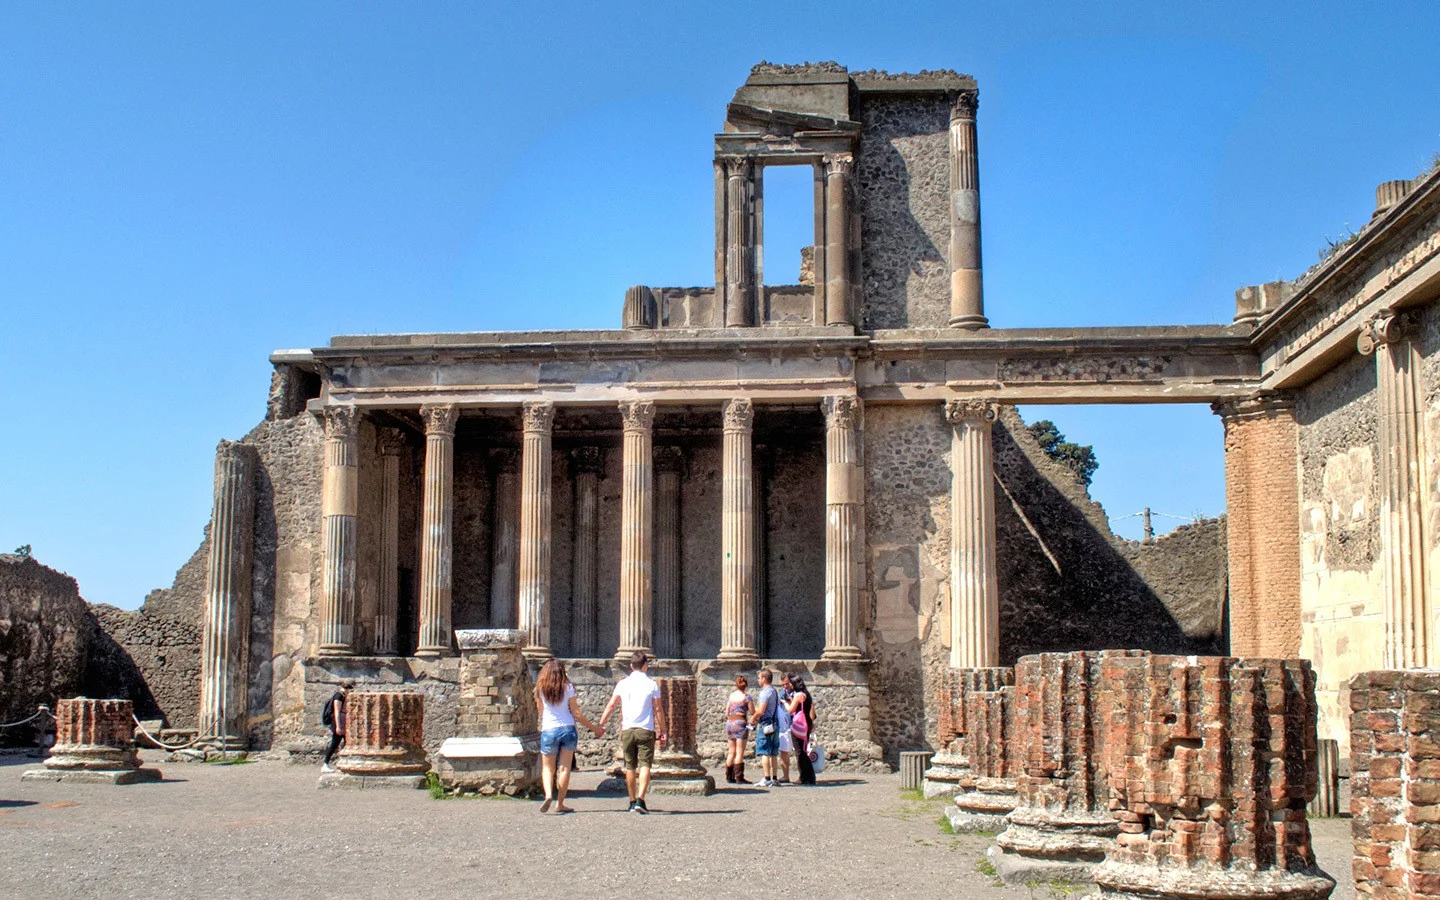 The buried Roman city of Pompeii, Italy